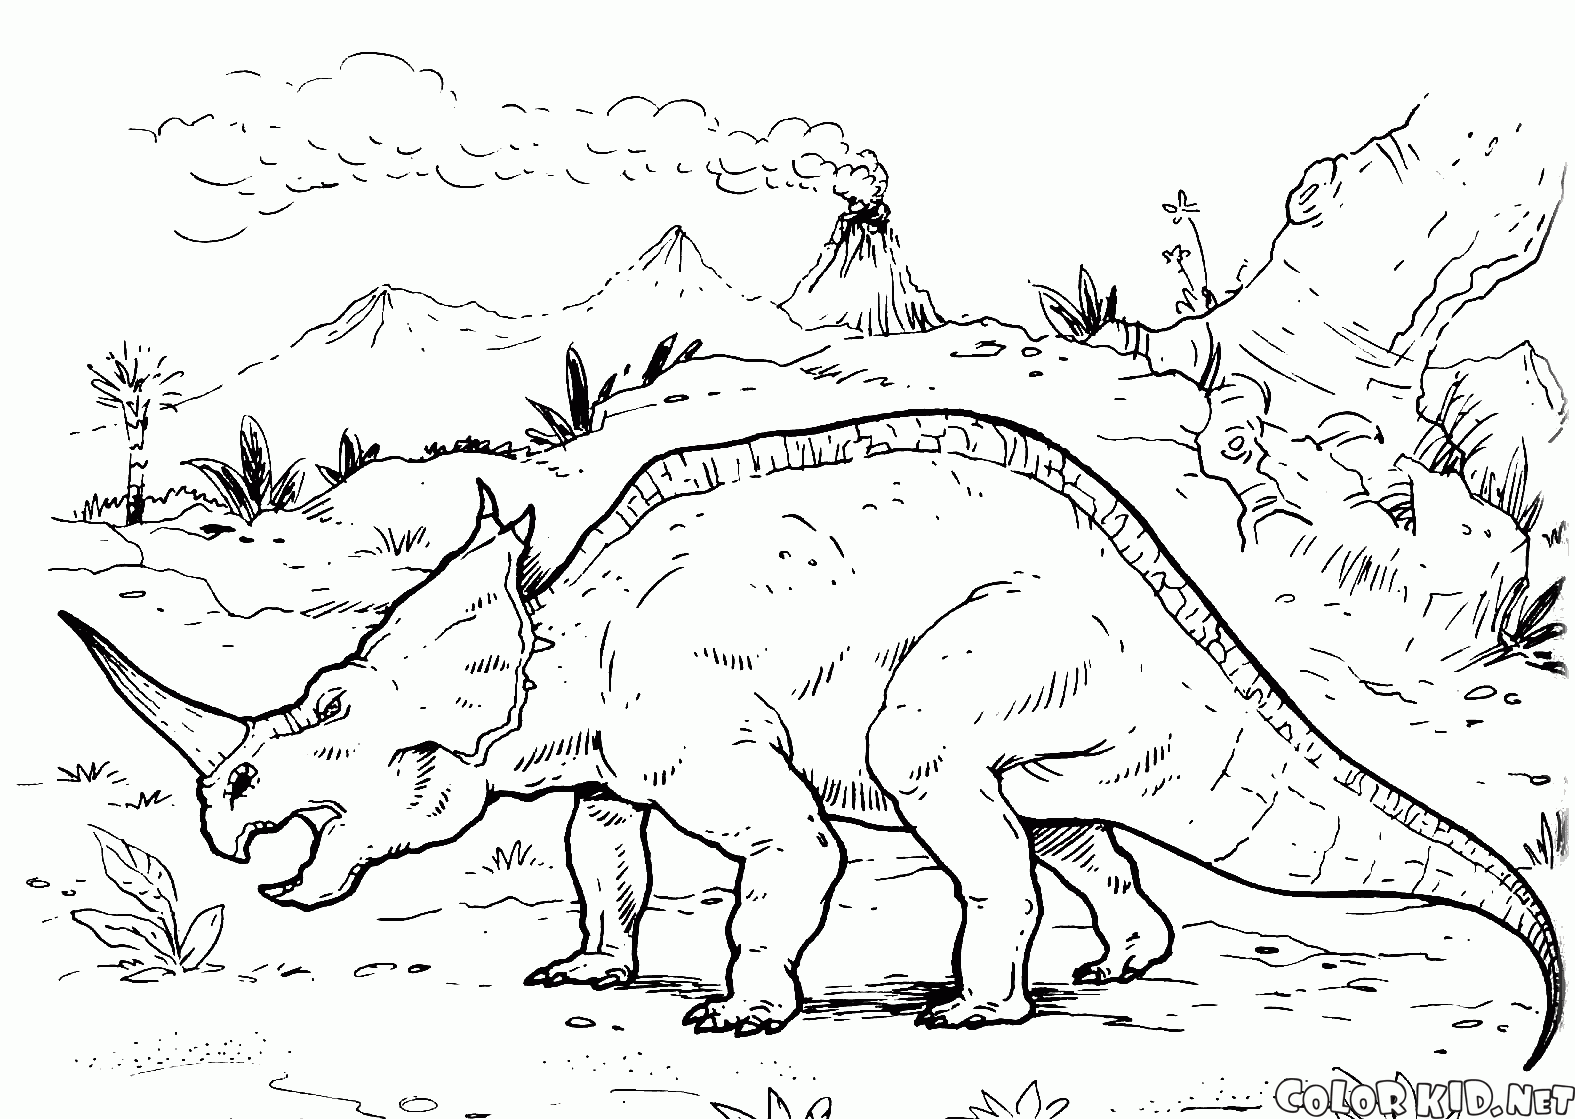 Centrosaurus is traveling the world